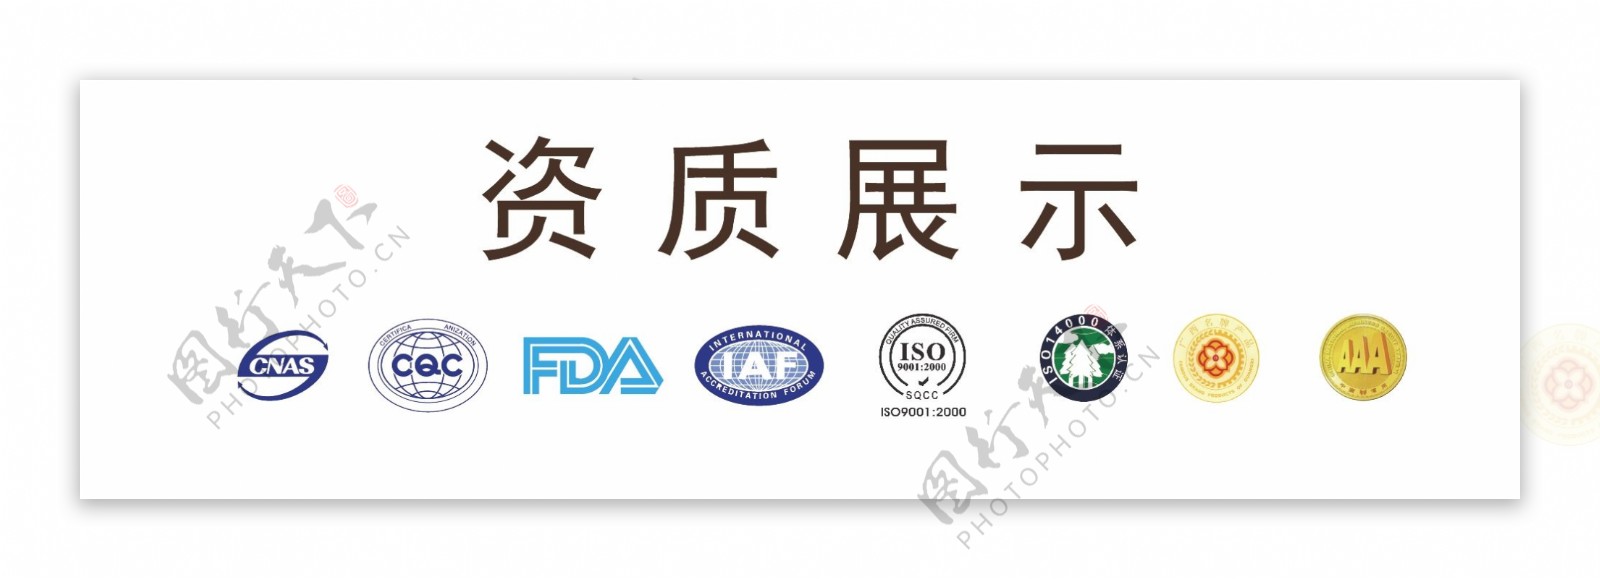 FDA认证ISO9000认证广西名牌位图图片